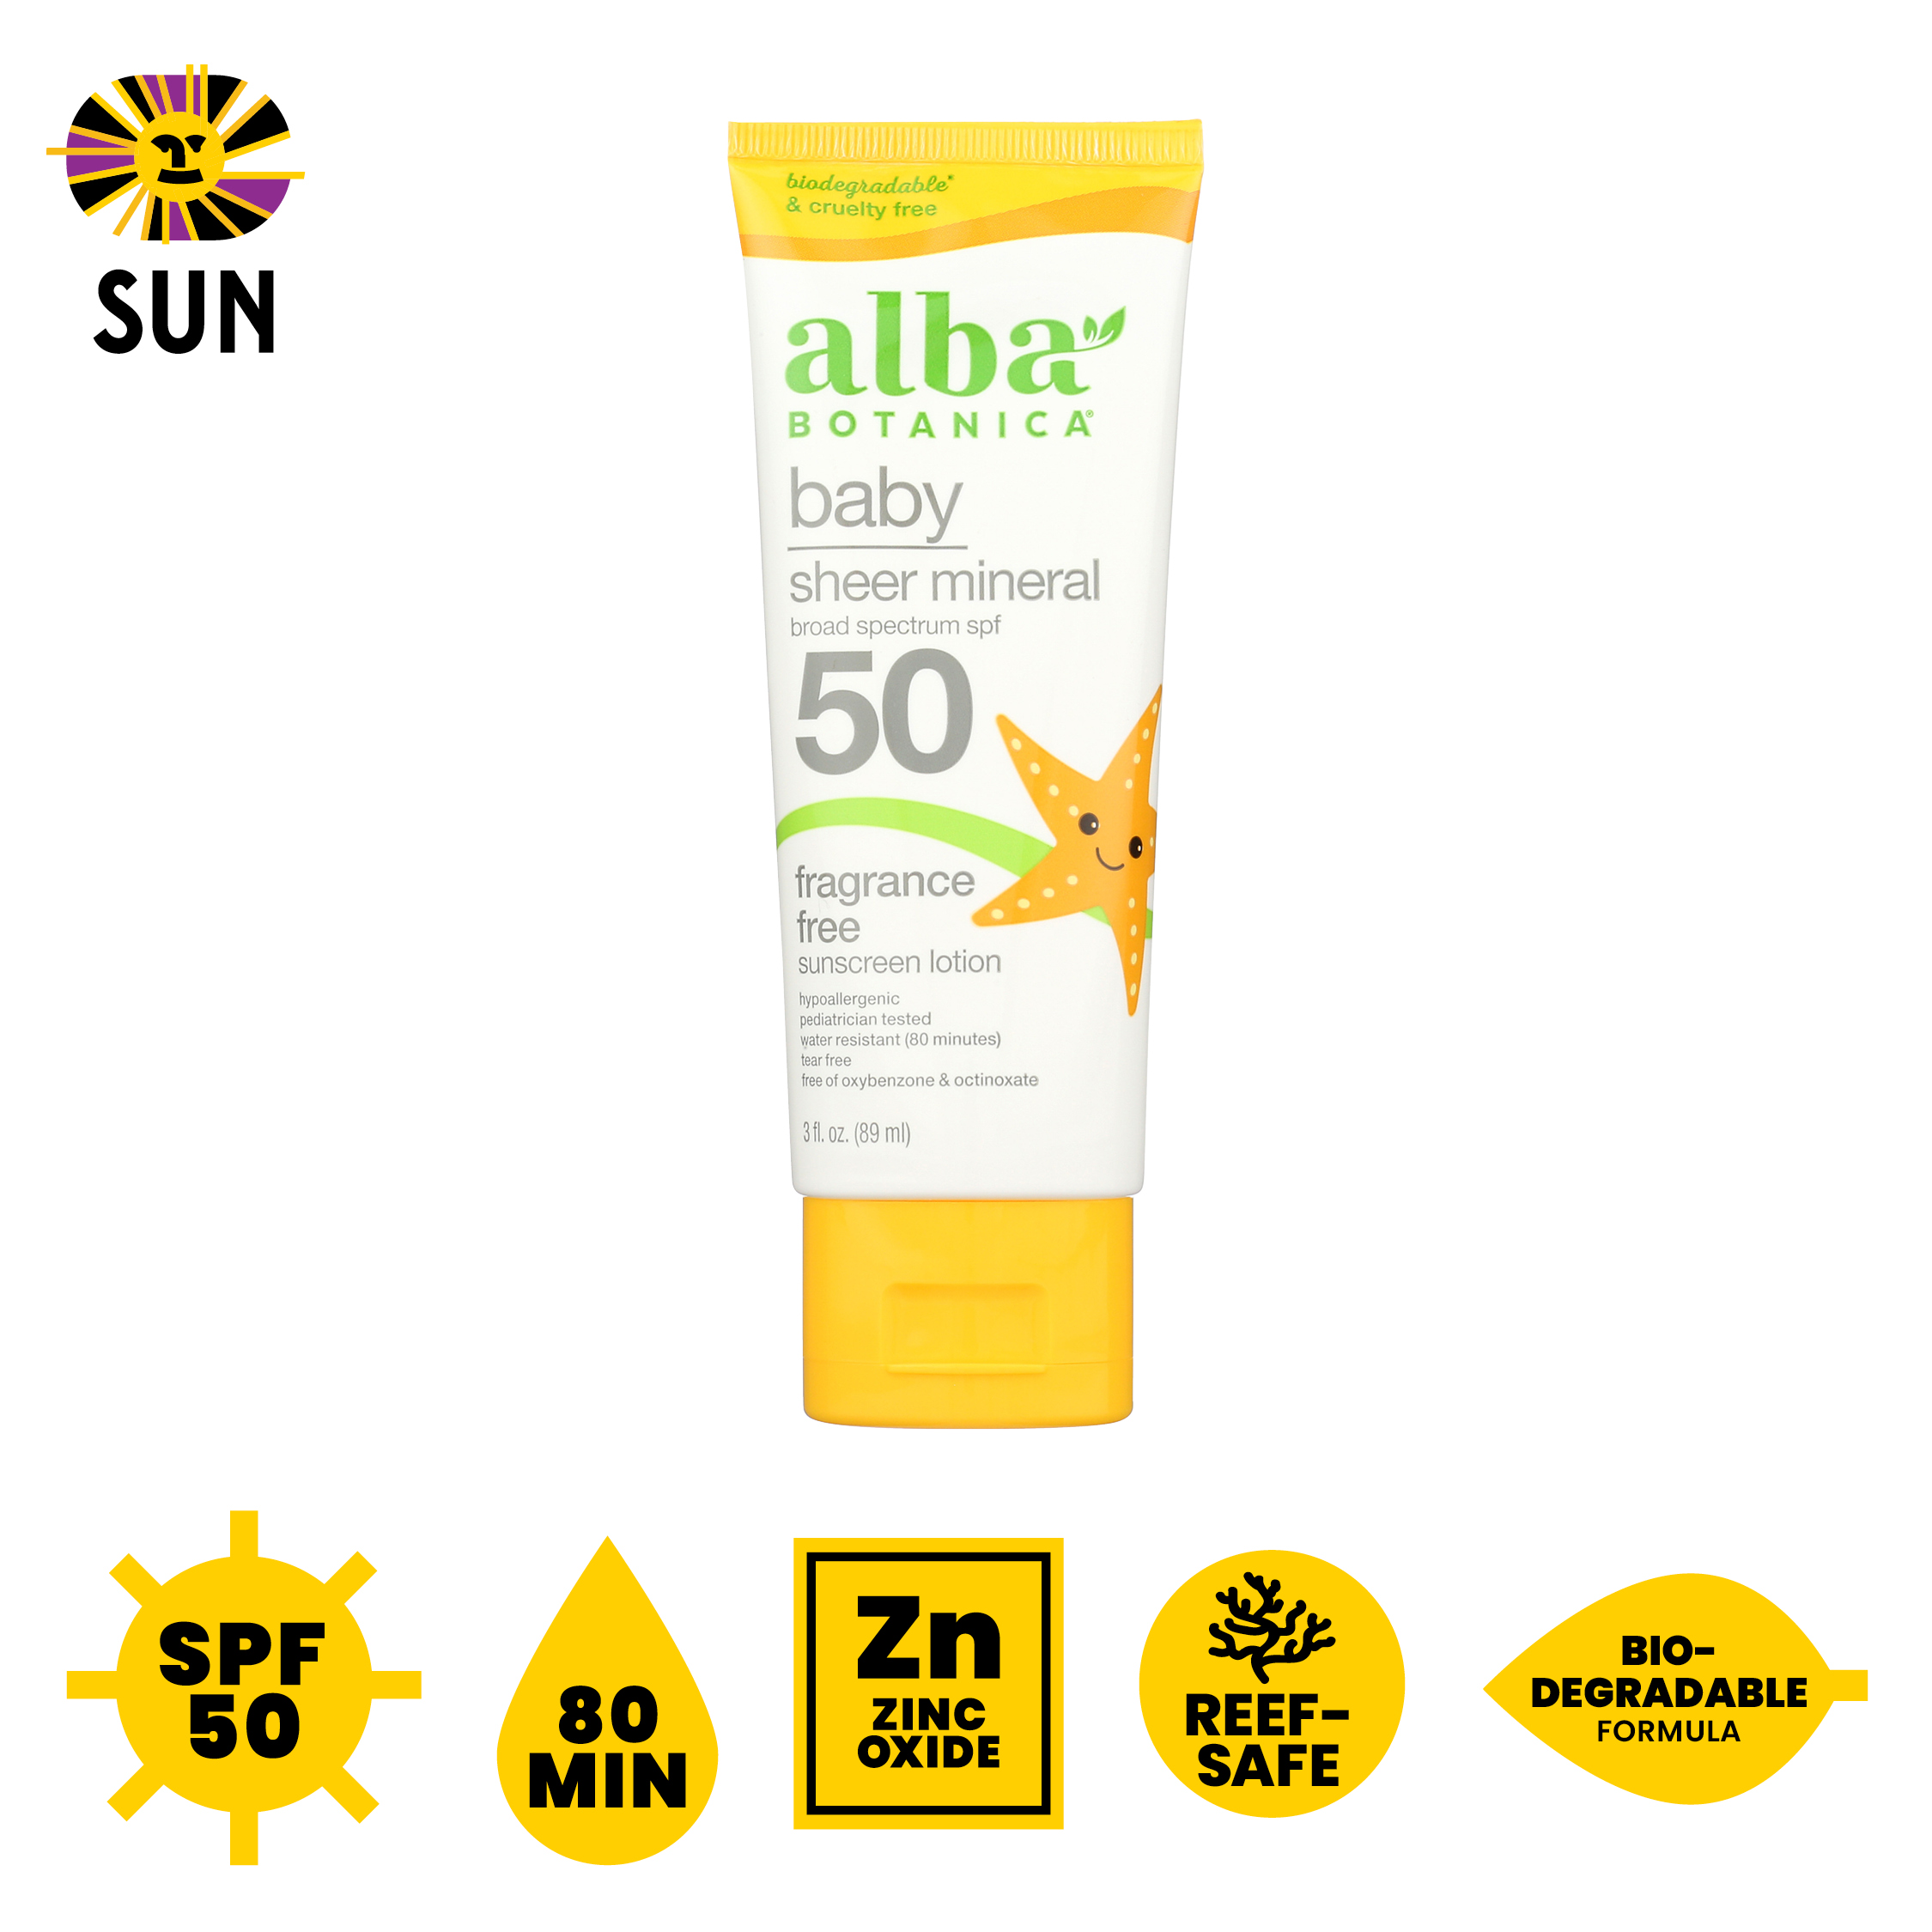 2406 SUN and BUG 1080s2026 sun bug 1080s Alba Botanica SPF 50 Baby Sheer Mineral Sunscreen Fragrance free